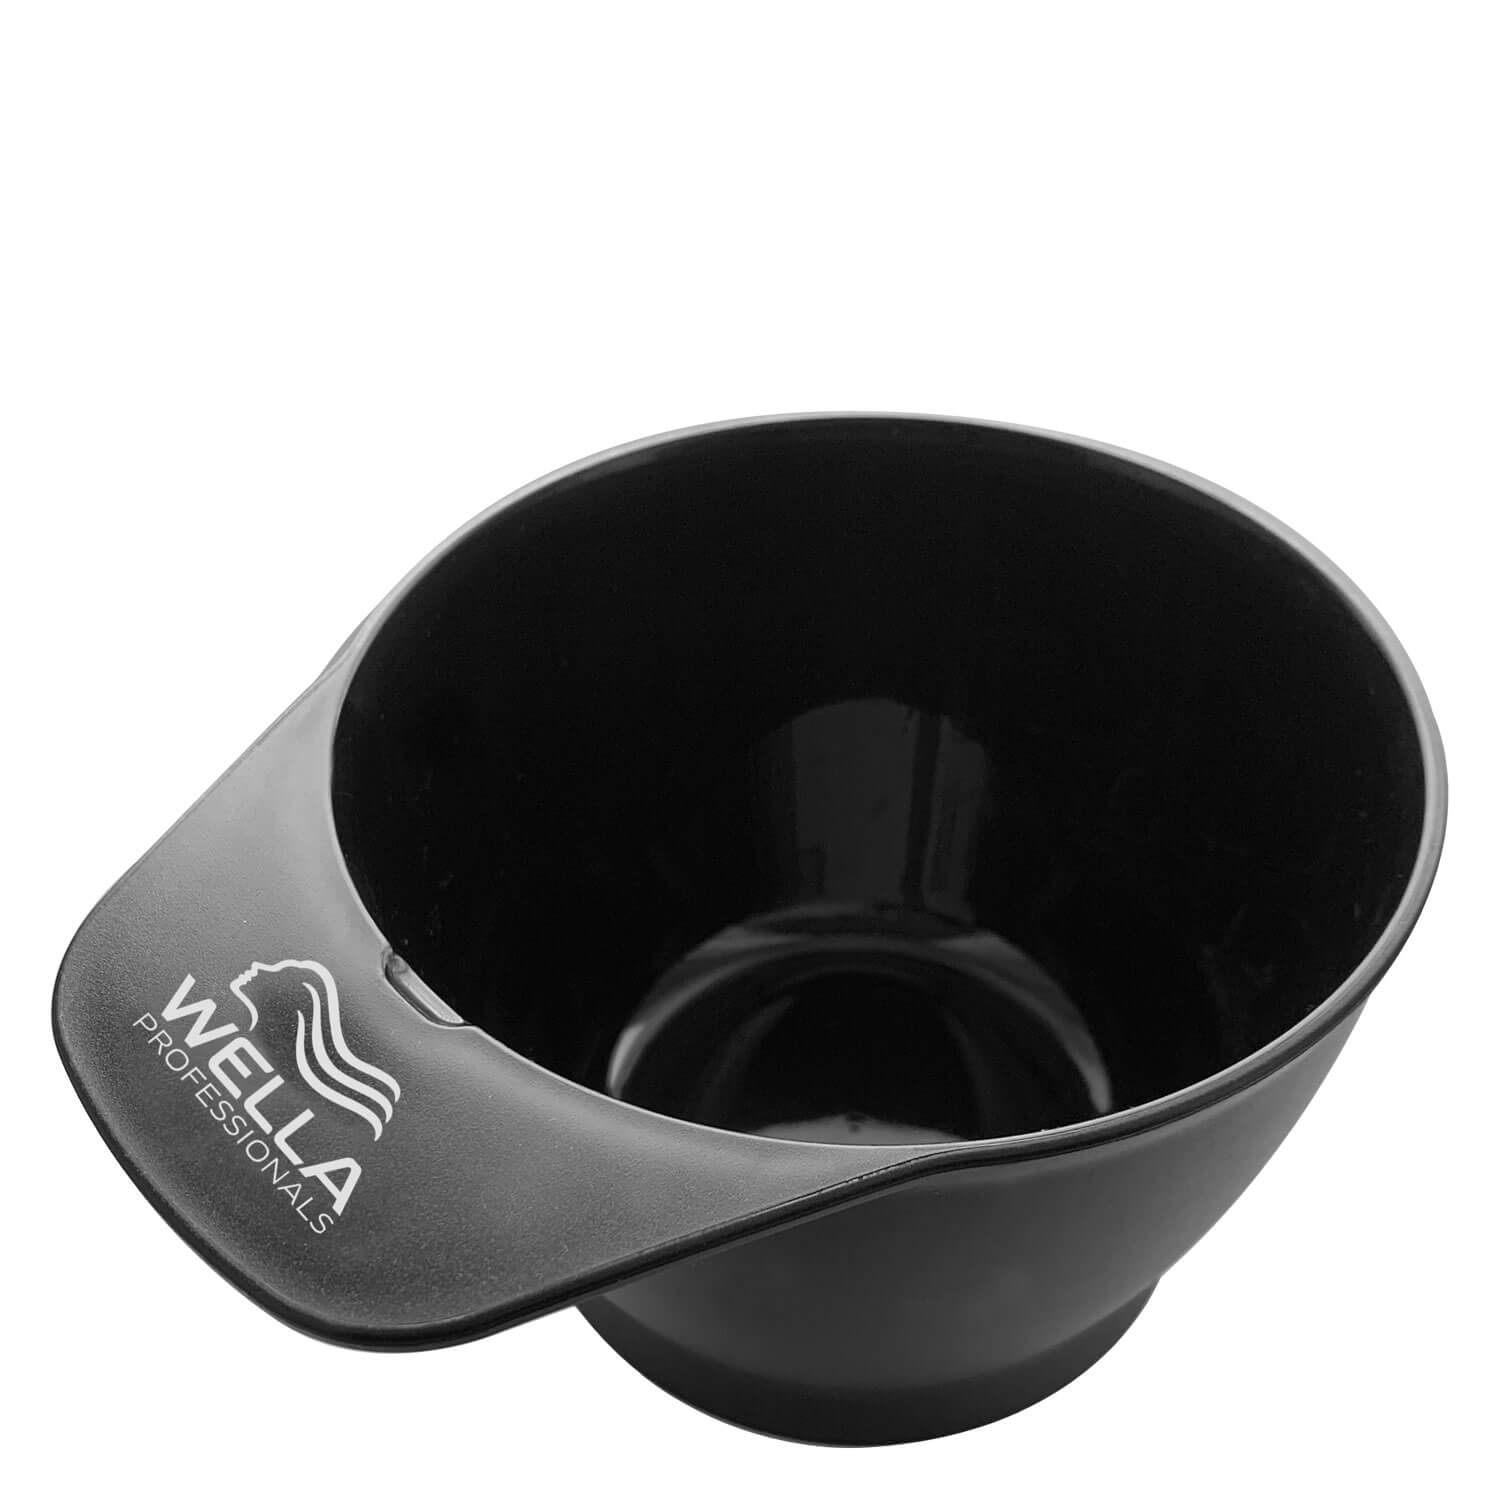 Produktbild von Wella Tools - Color Bowl Black